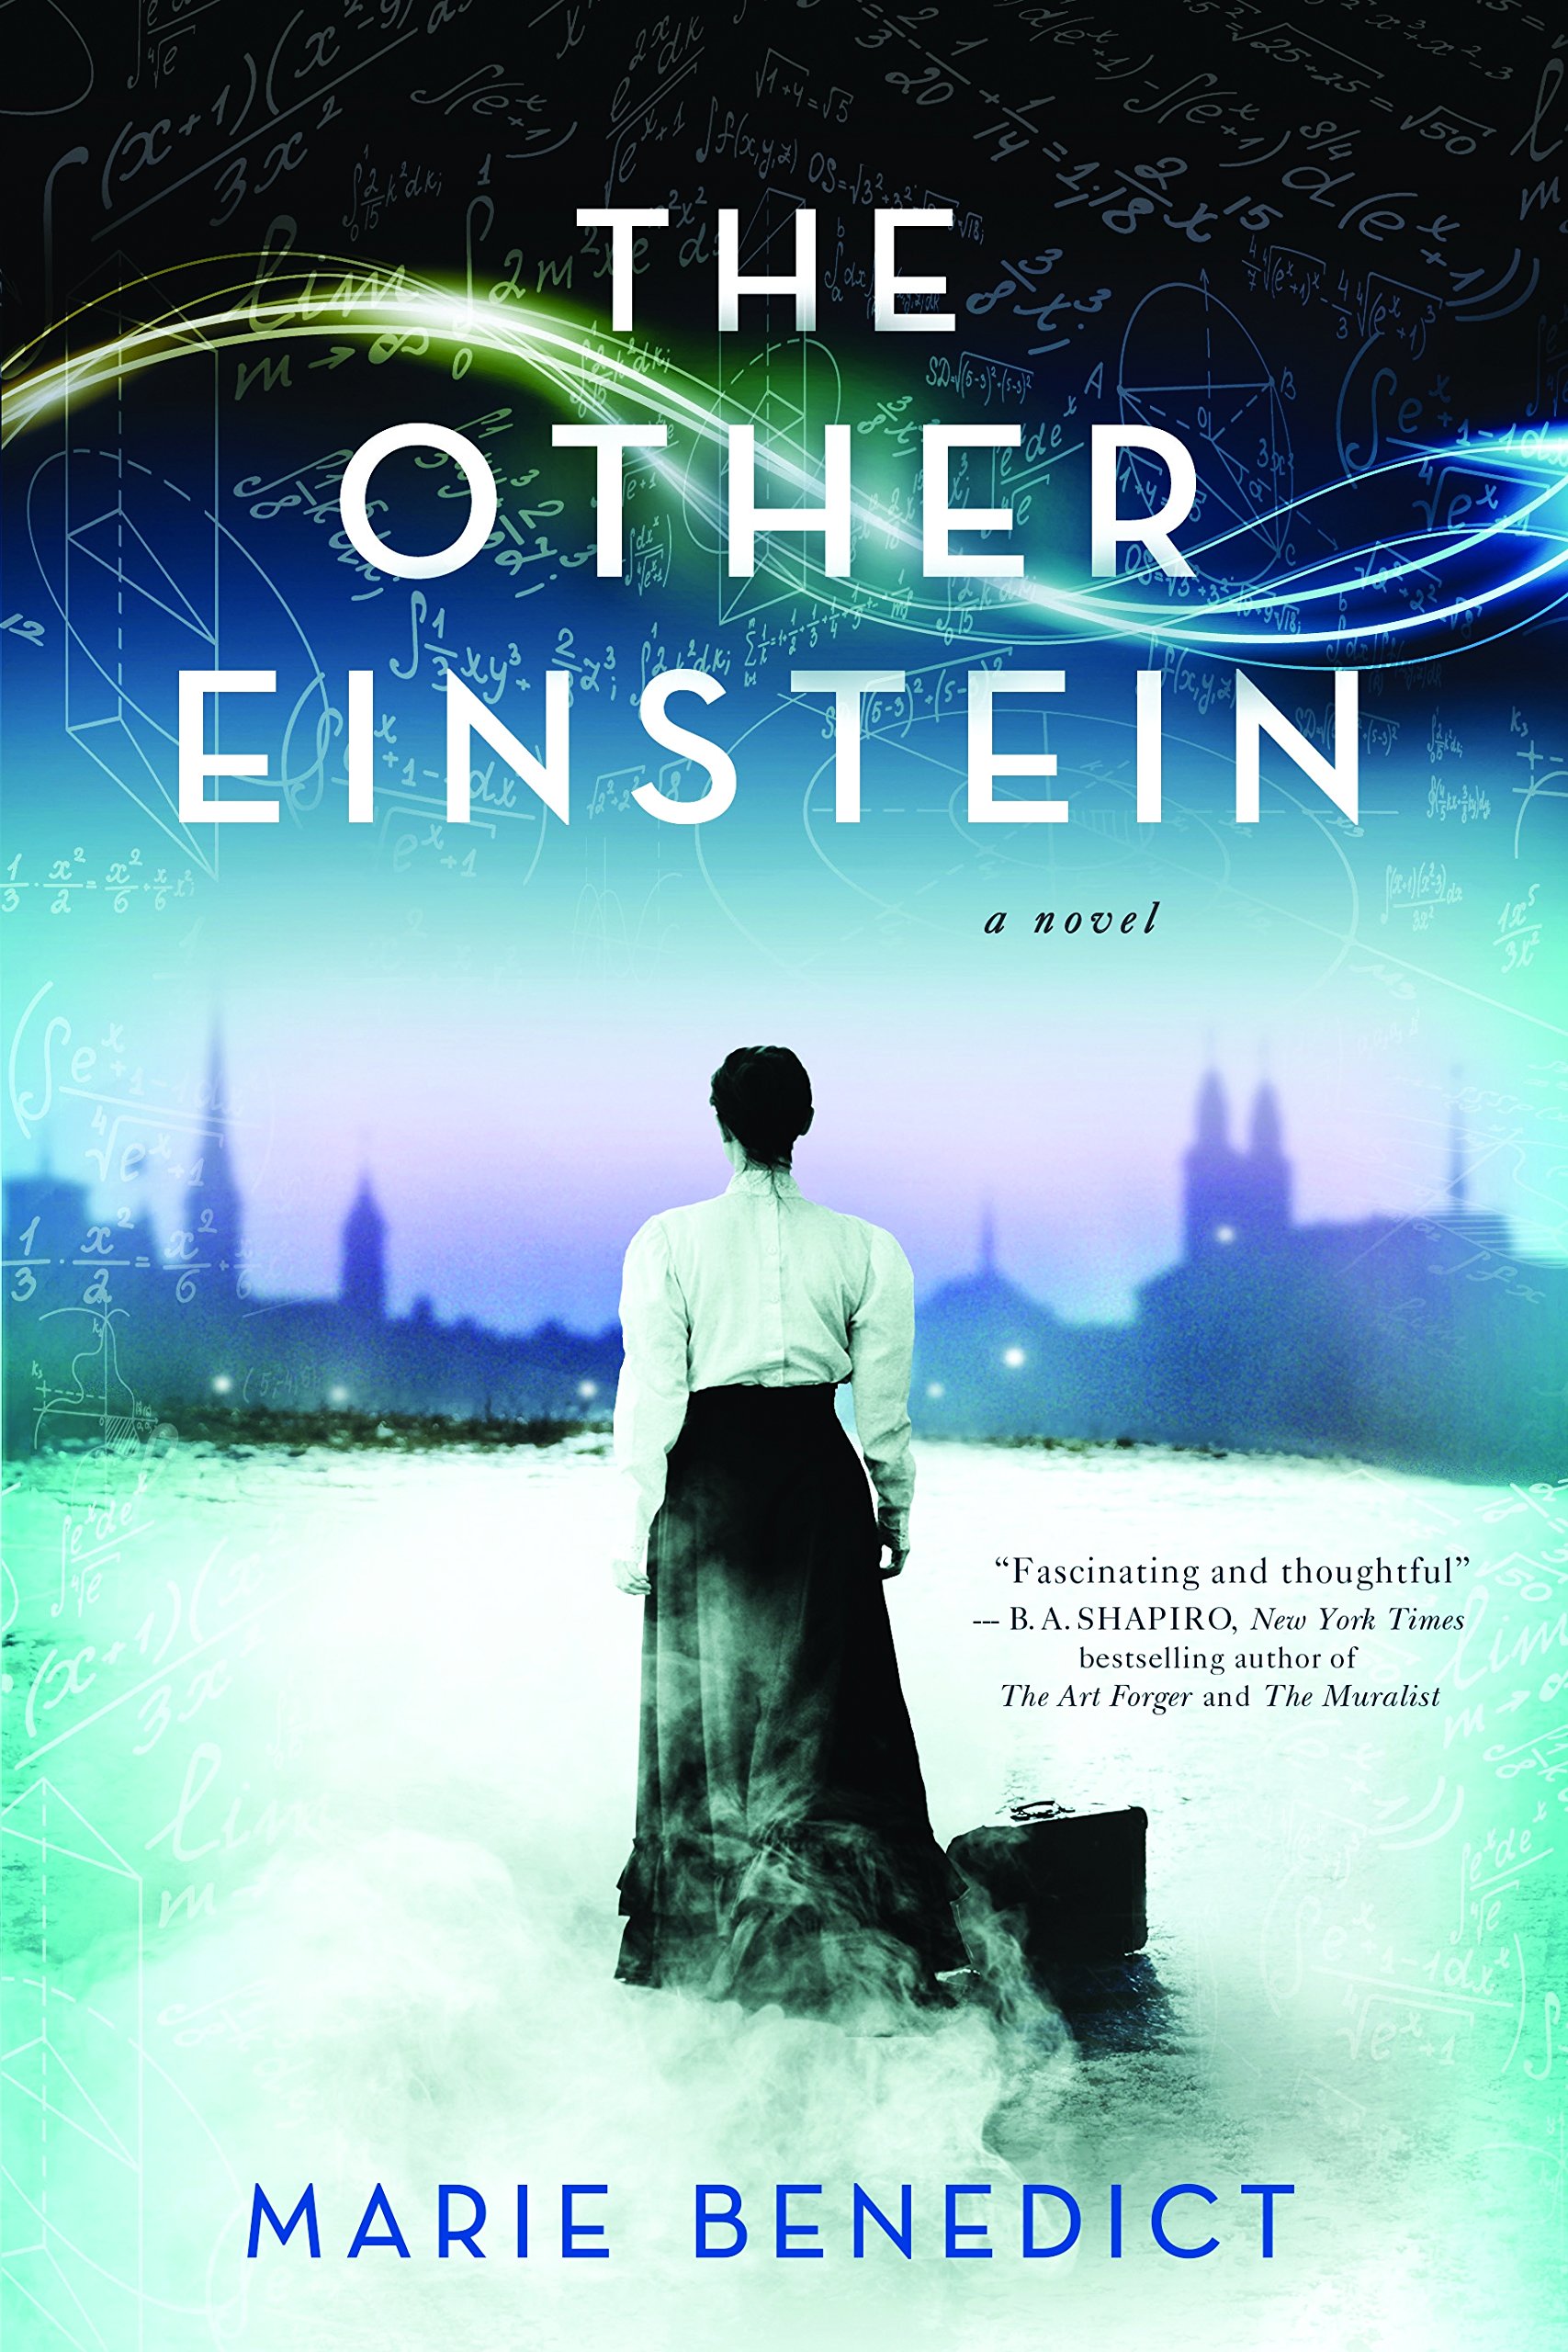 The Other Einstein by Marie Benedict